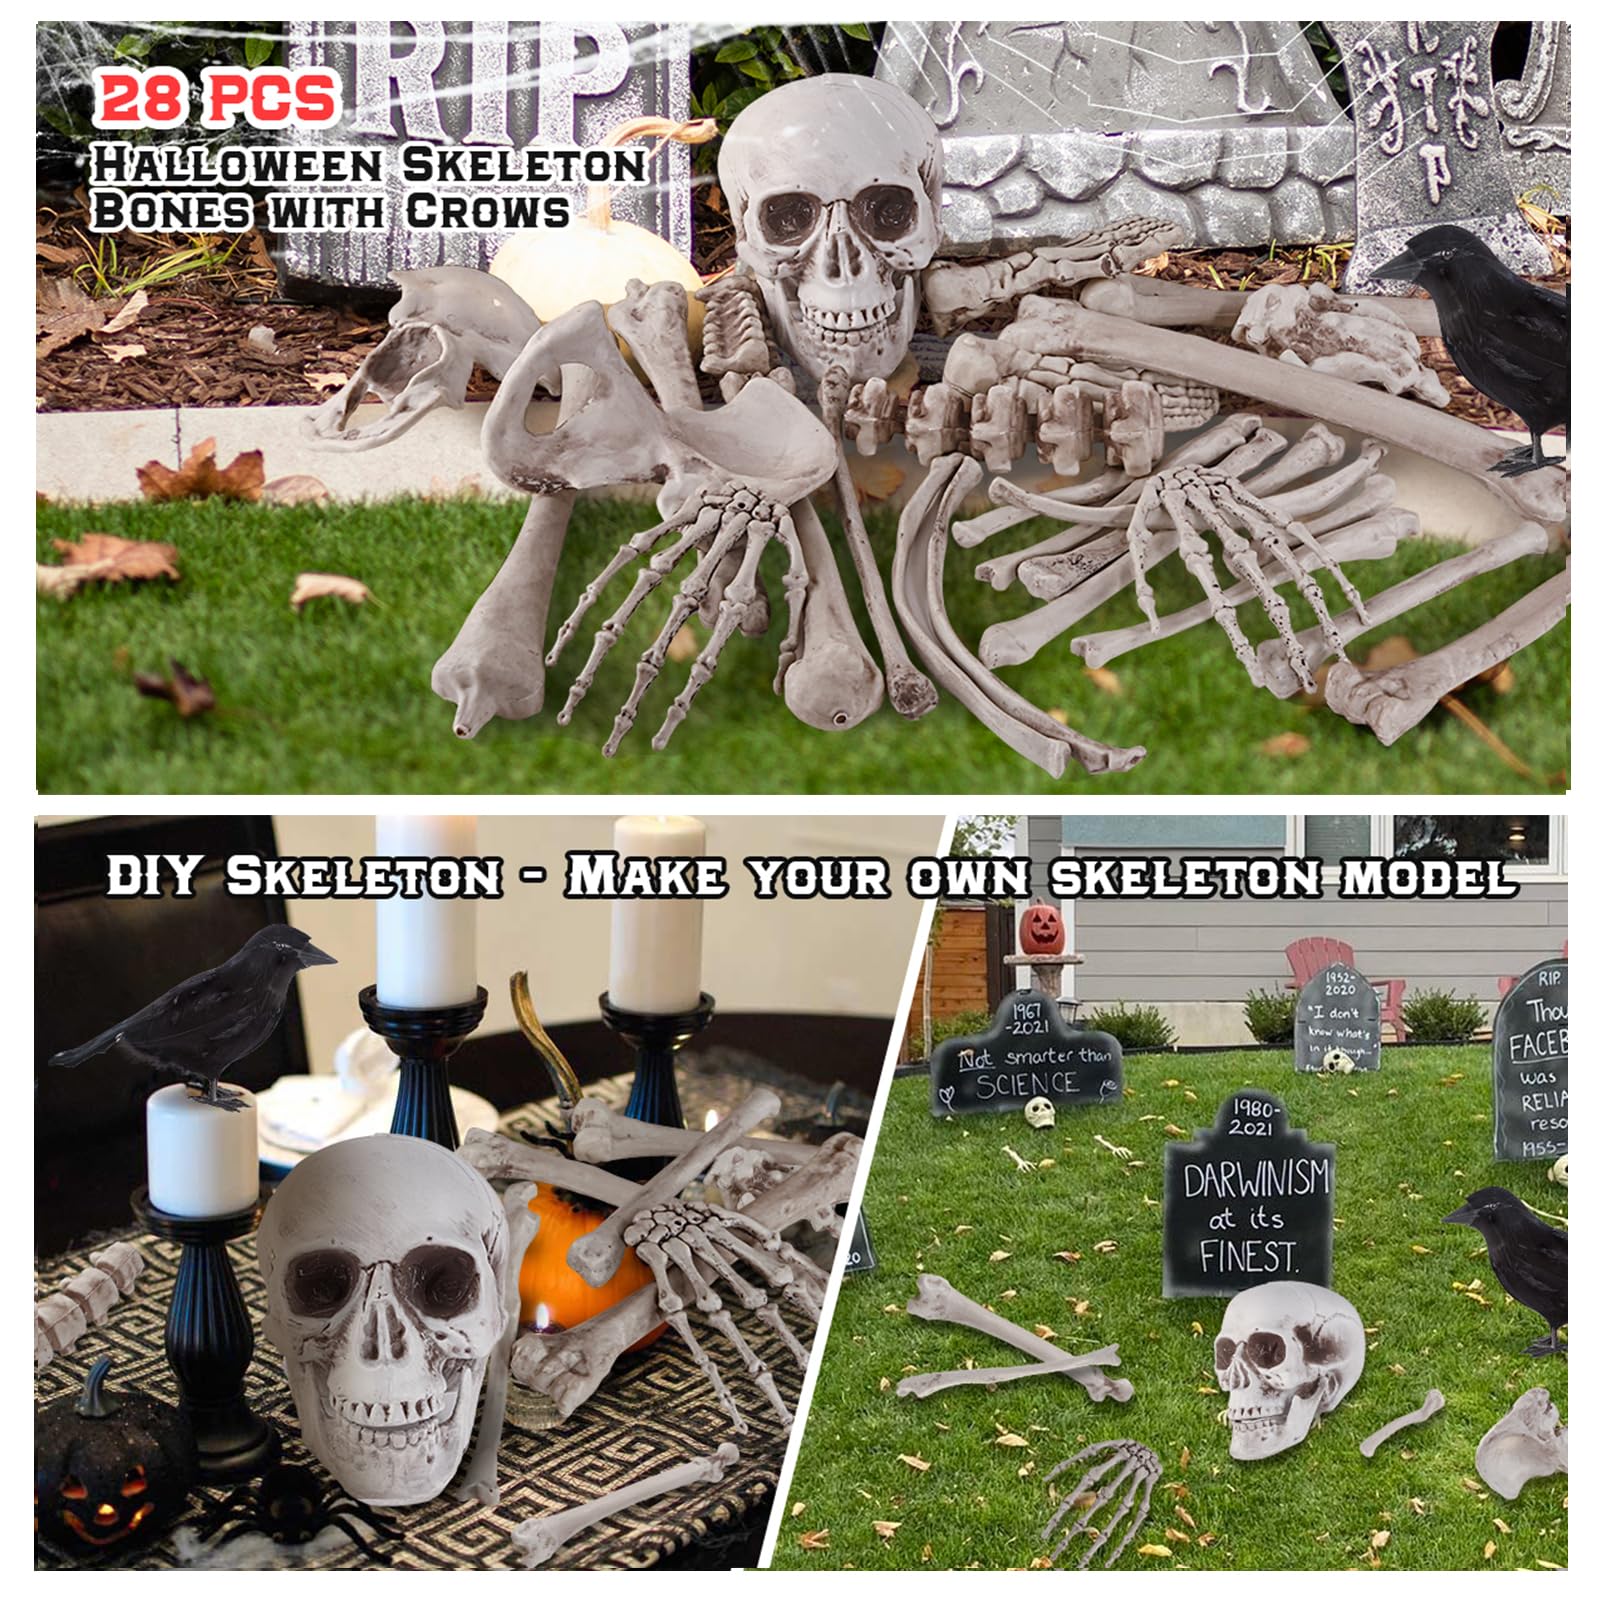 AuroTops Halloween Decoration 29PCS Skeleton Bones and Skulls with a Crow for Halloween Decor/Spooky Graveyard Ground, Outdoor Indoor Halloween Porps Decoration for Life Size Skull Bones